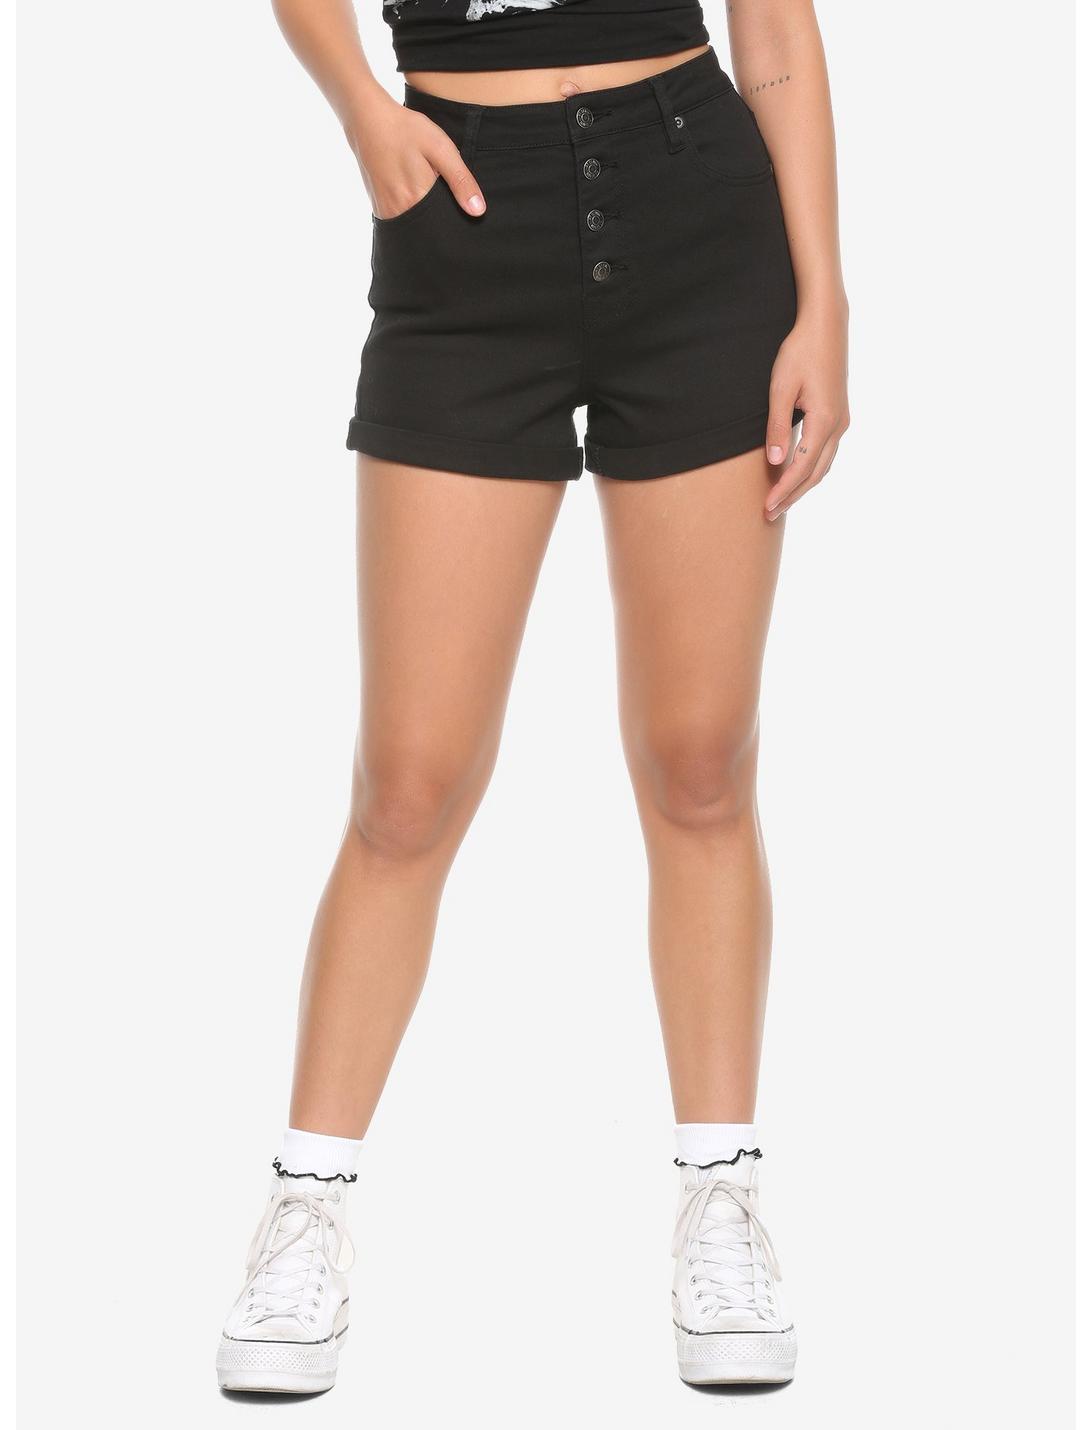 HT Denim Black Ultra Hi-Rise Button-Front Shorts, BLACK, hi-res